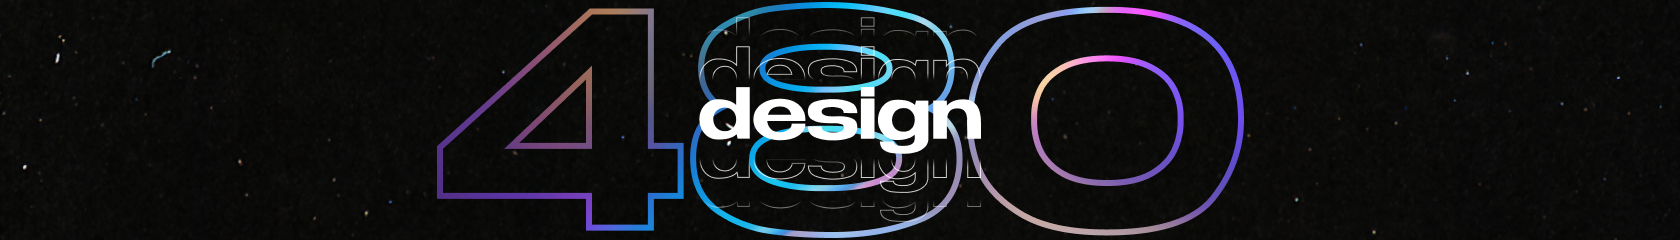 creator cover 480 Design